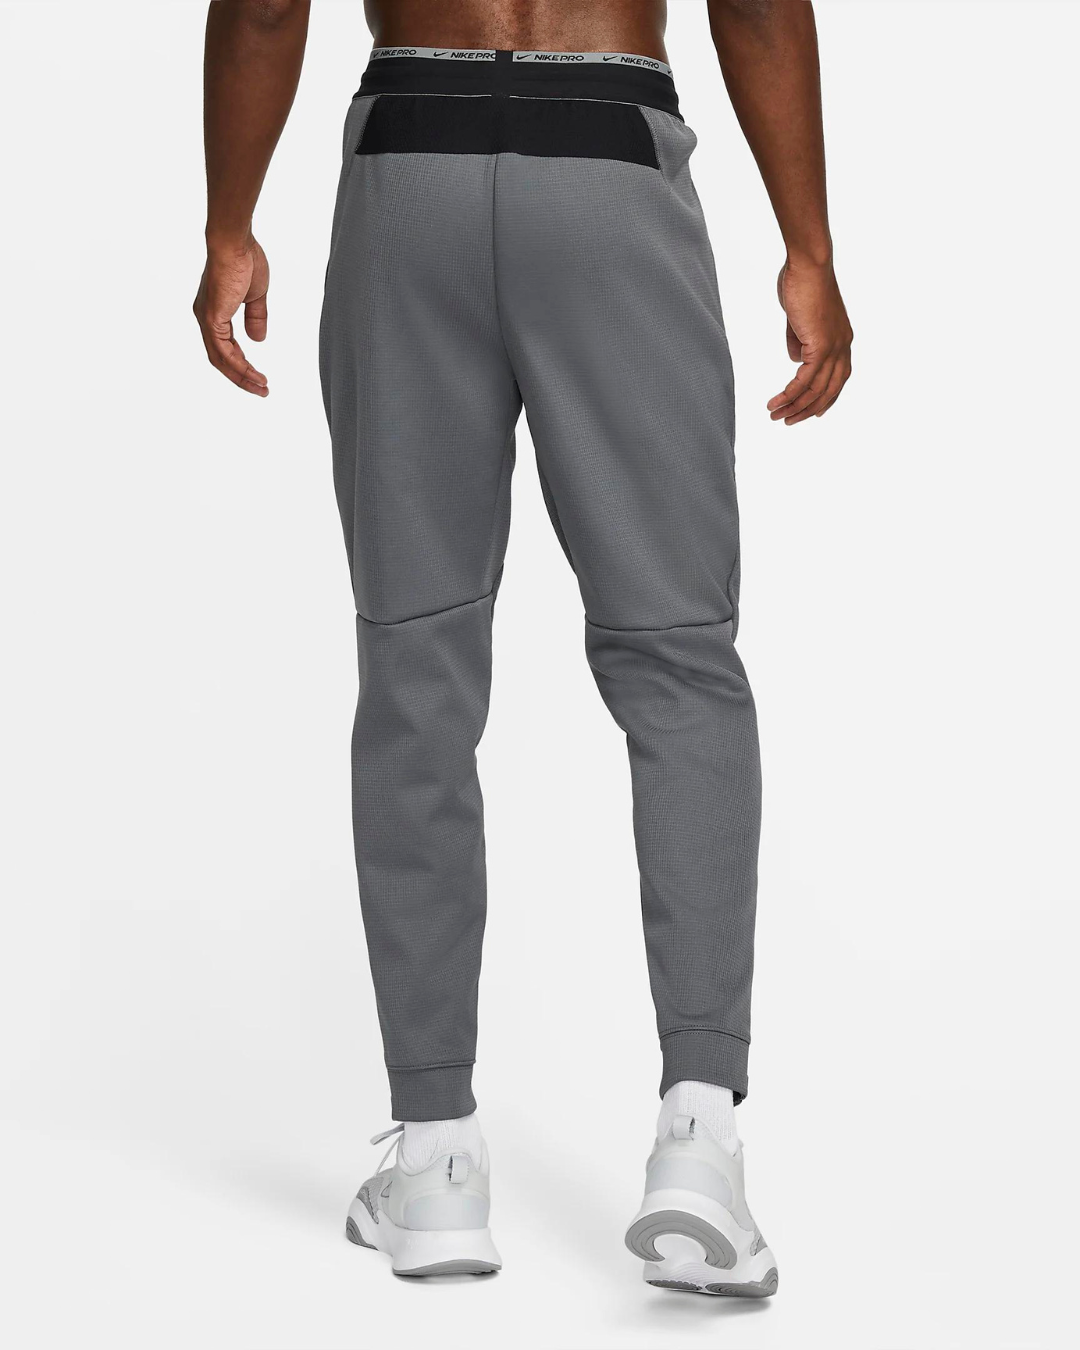 Nike Therma Sphere Pants - Gray